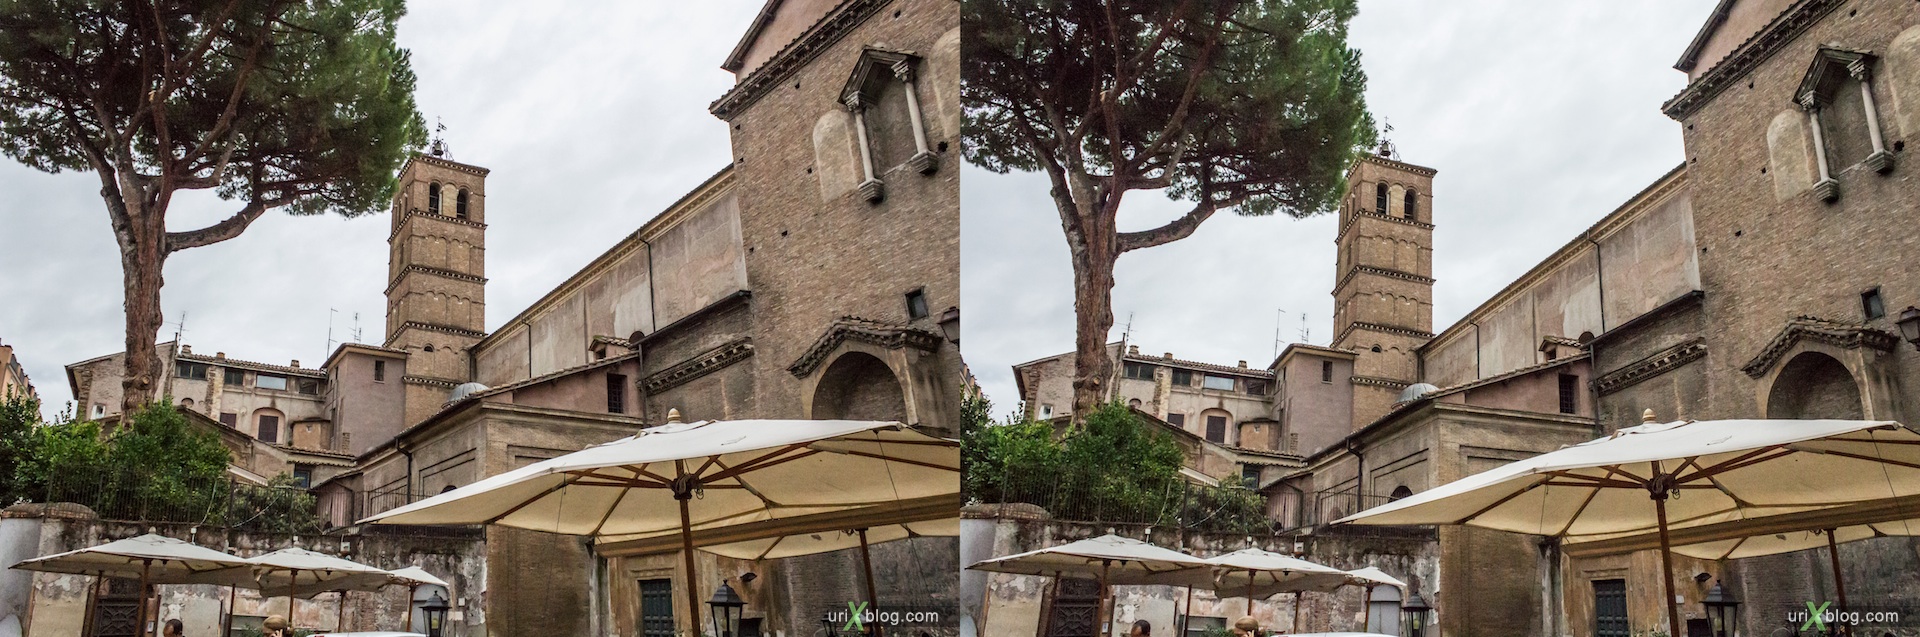 2012, piazza Sant Egidio square, Santa Maria in Trastevere church, Rome, Italy, Europe, 3D, stereo pair, cross-eyed, crossview, cross view stereo pair